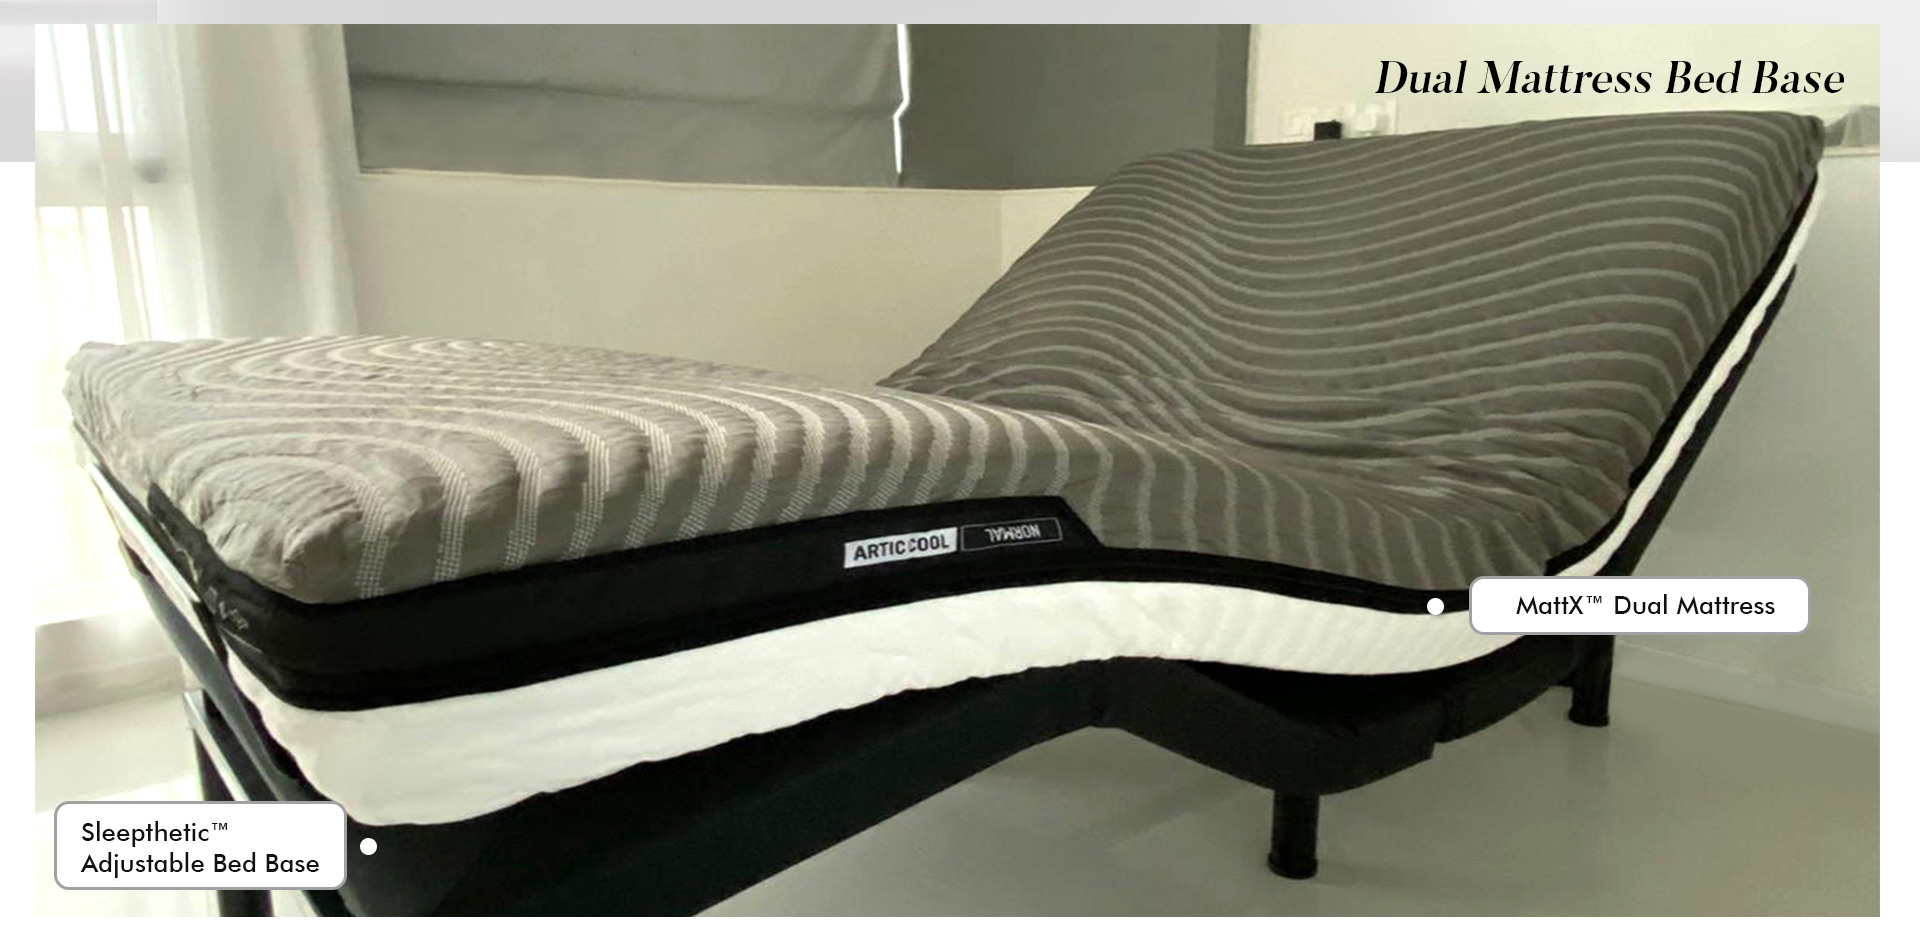 Dual Mattress Bed Base Bundle Deal